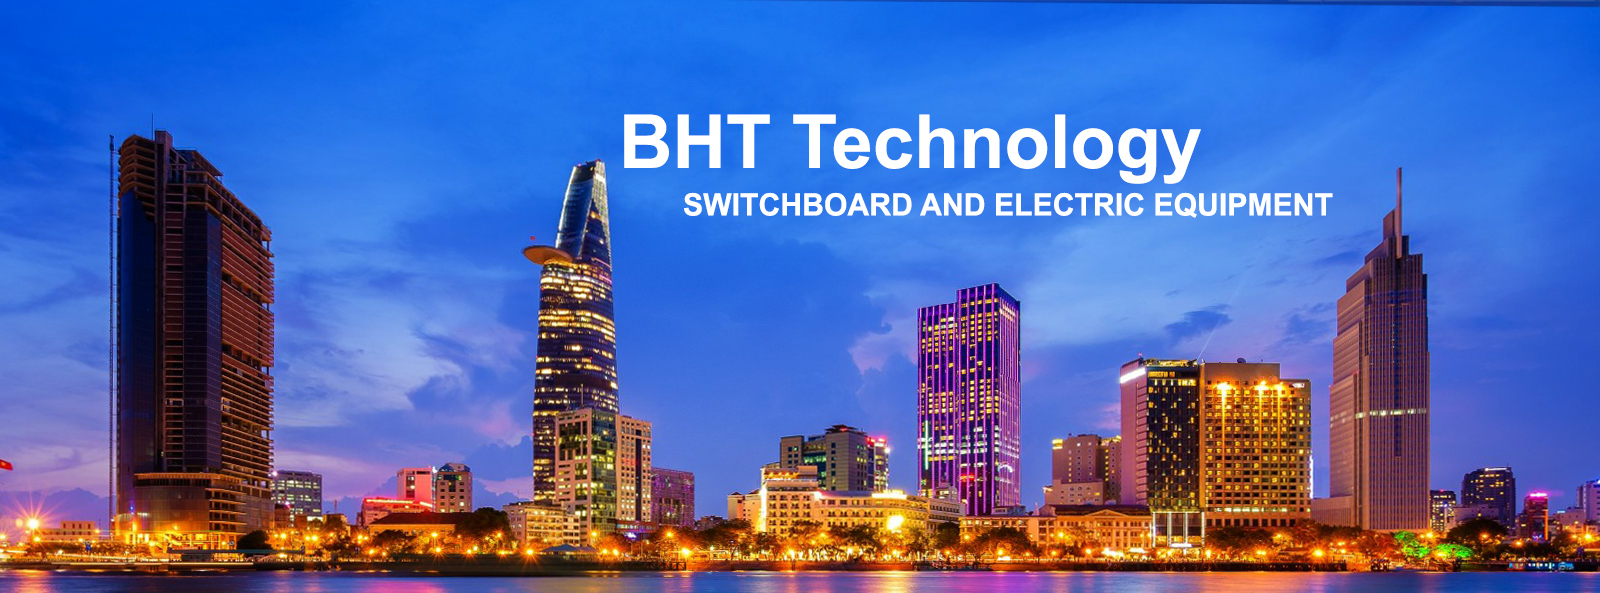 BHT Technology